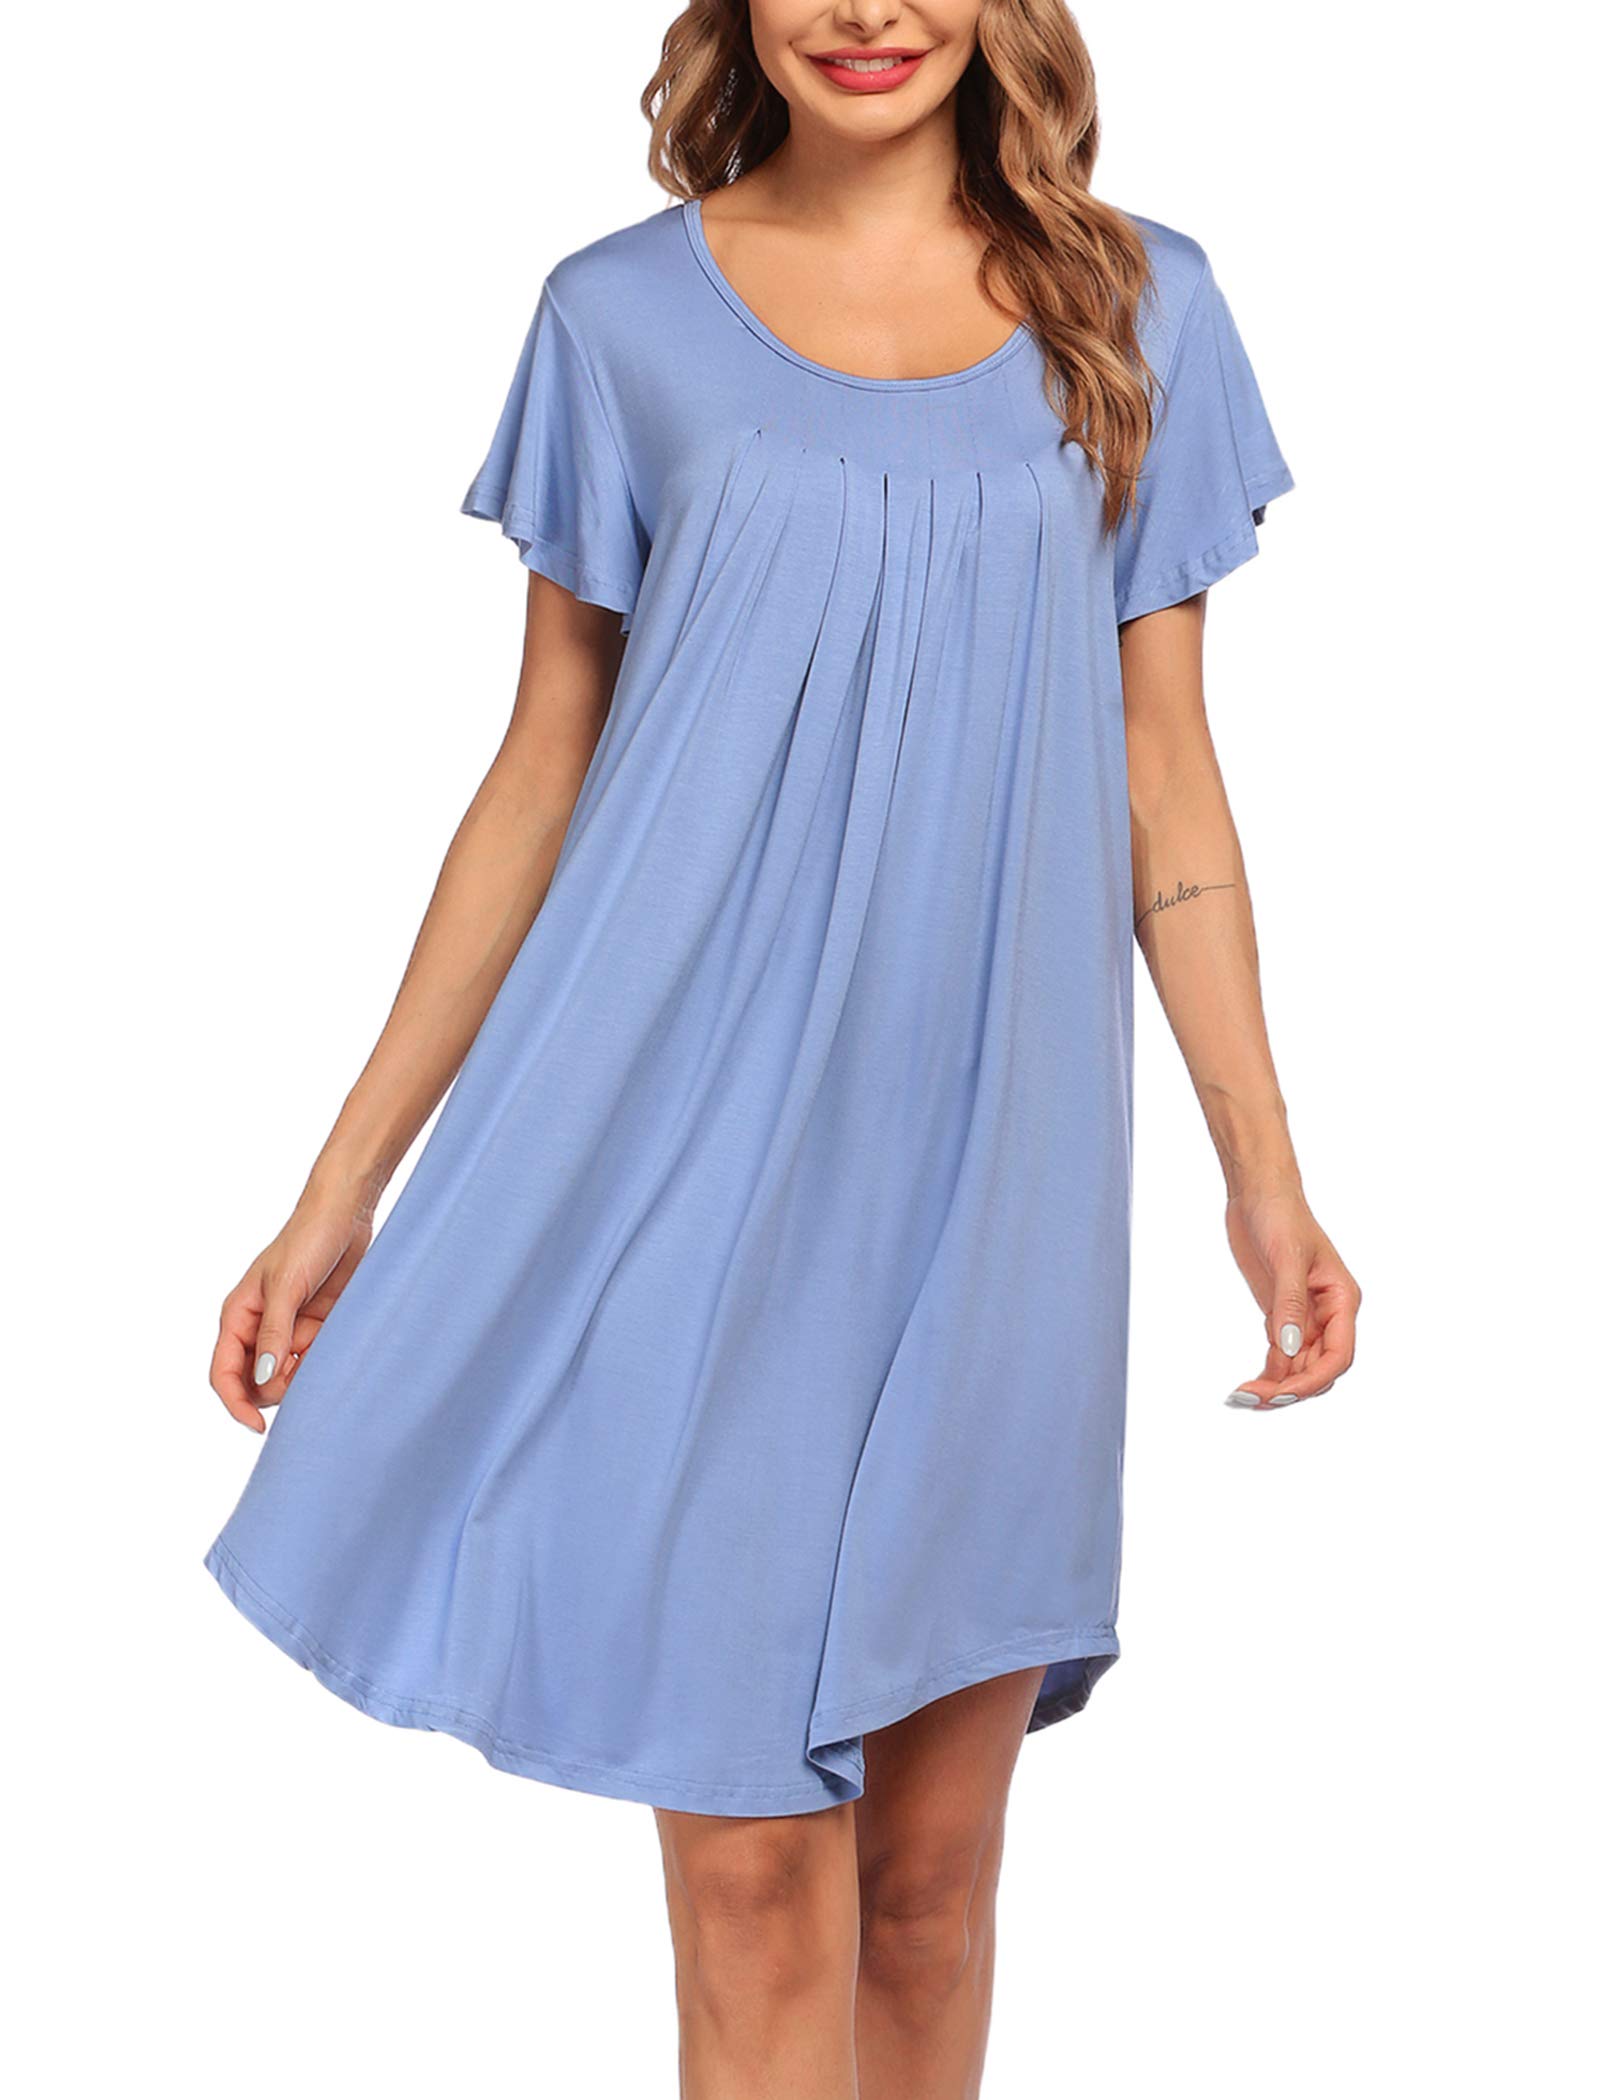 Womens Sleepshirt Soft Sleepwear (45)